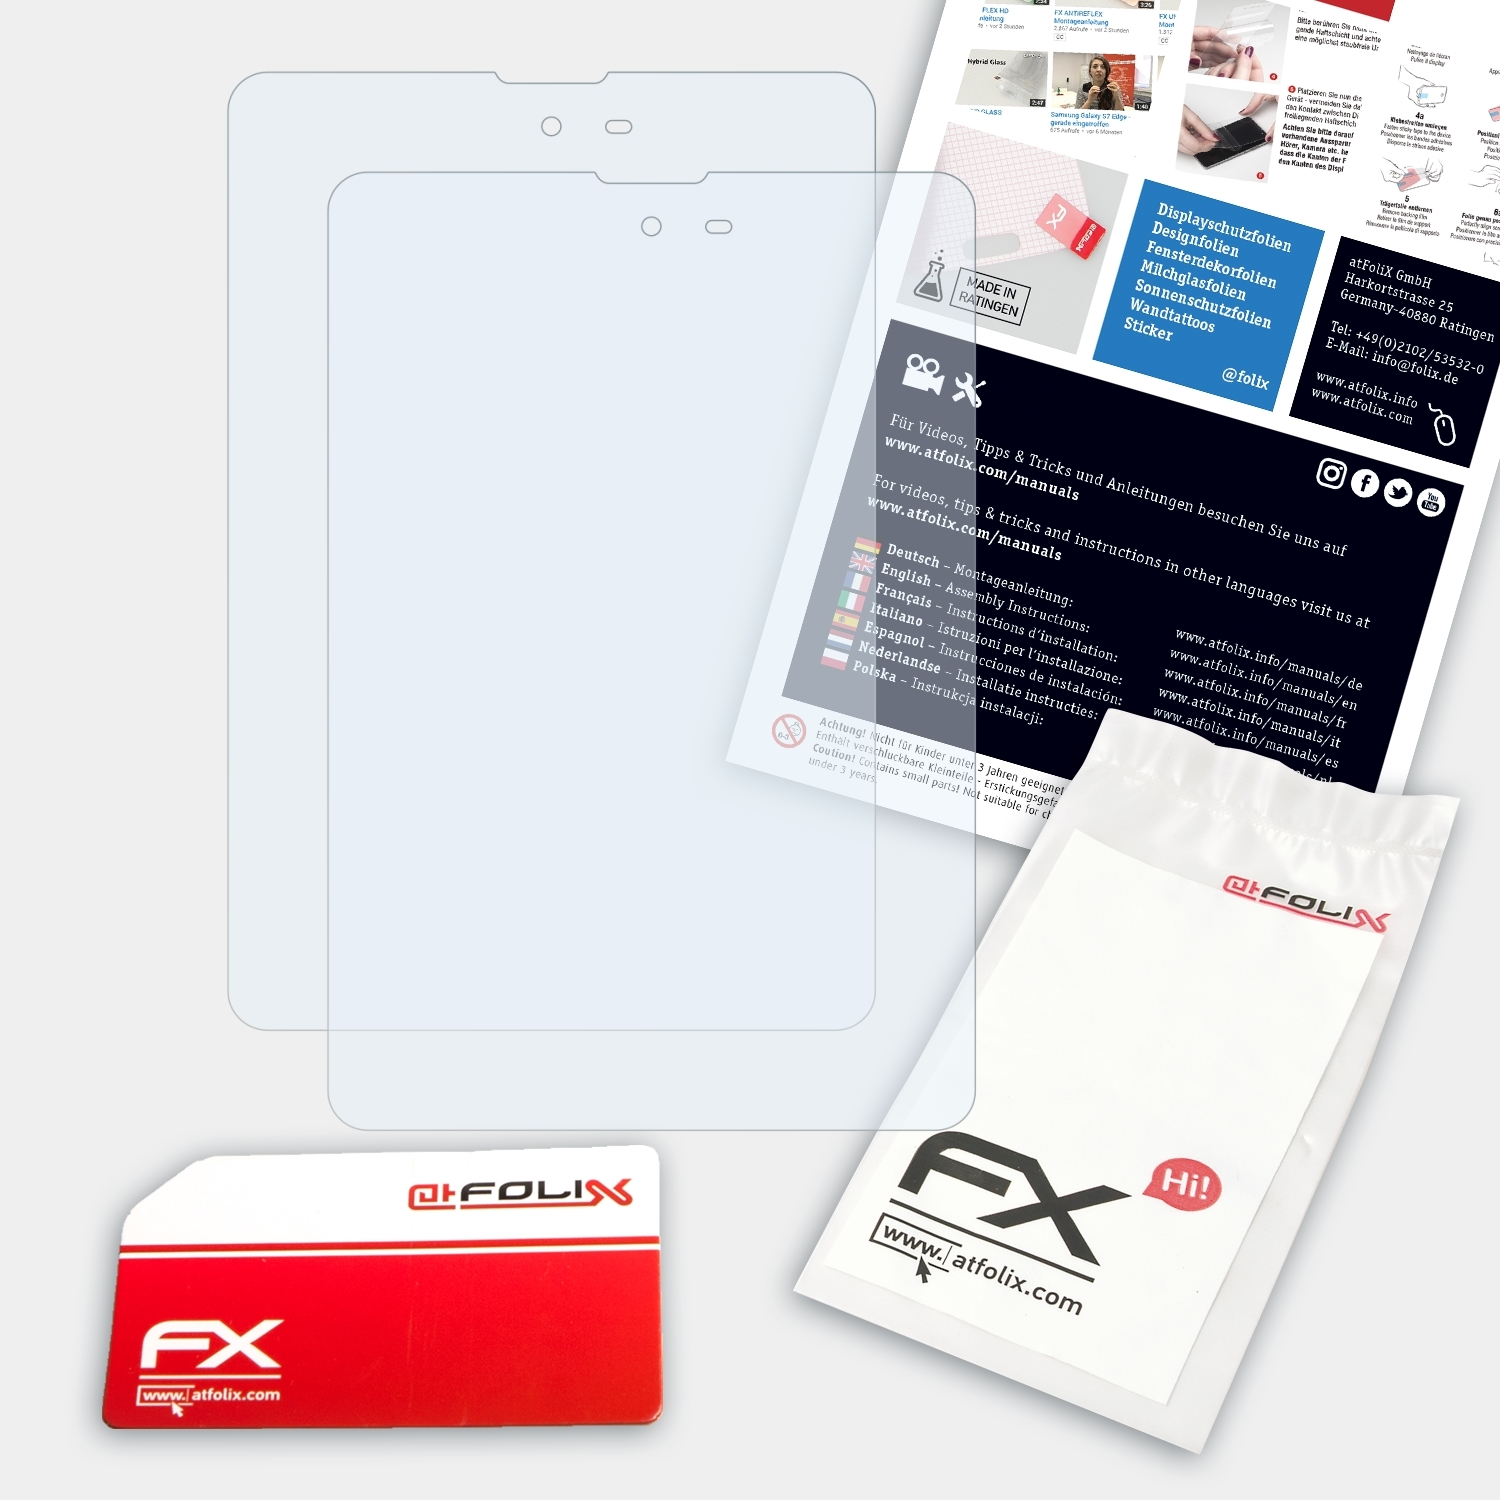 ATFOLIX 2x FX-Clear Displayschutz(für Haier Pad Mini D85)